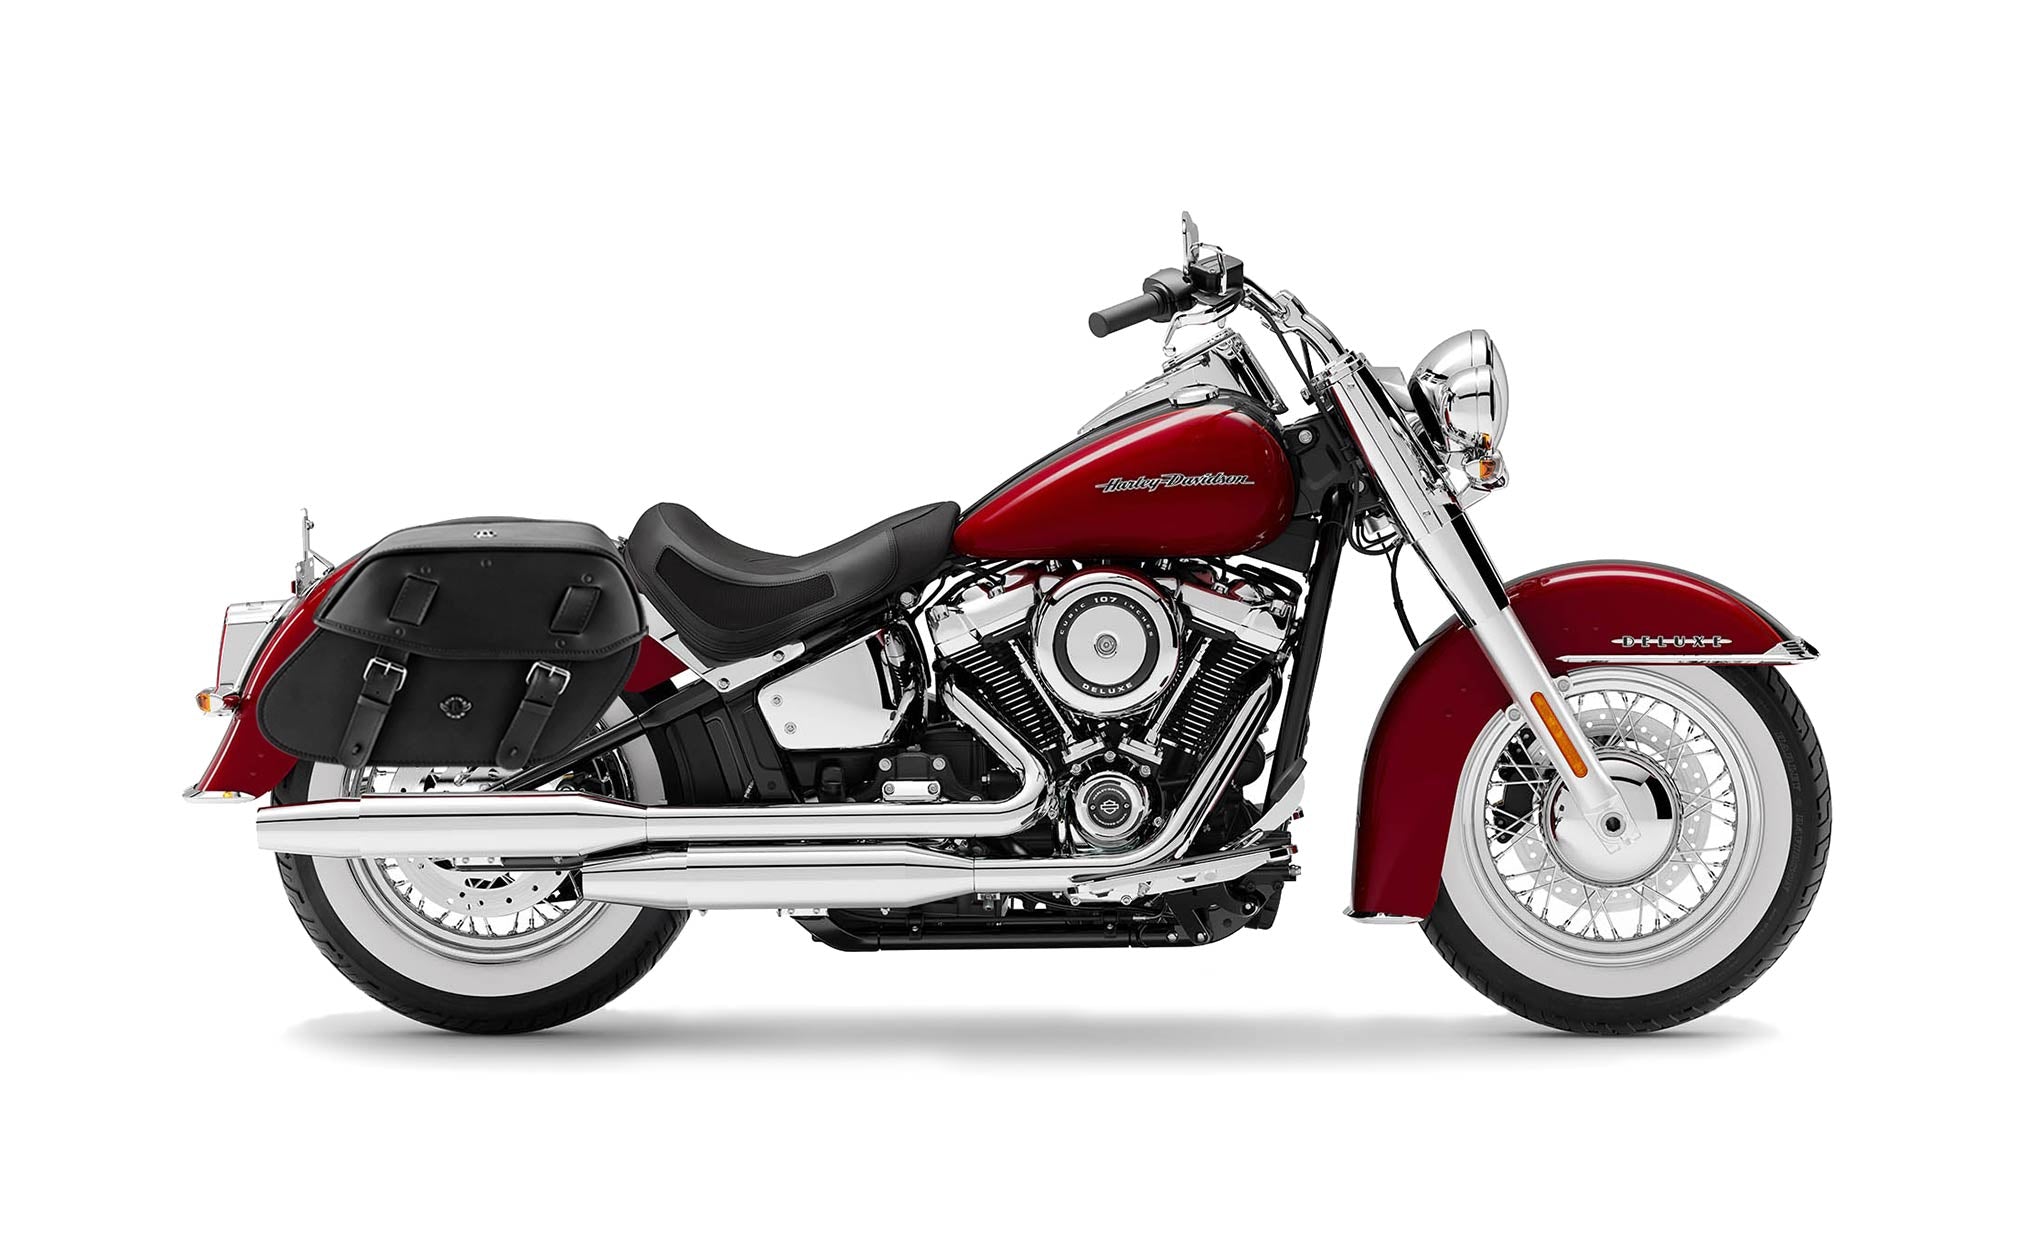 Viking Odin Large Leather Motorcycle Saddlebags For Harley Softail Deluxe Flstn I on Bike Photo @expand